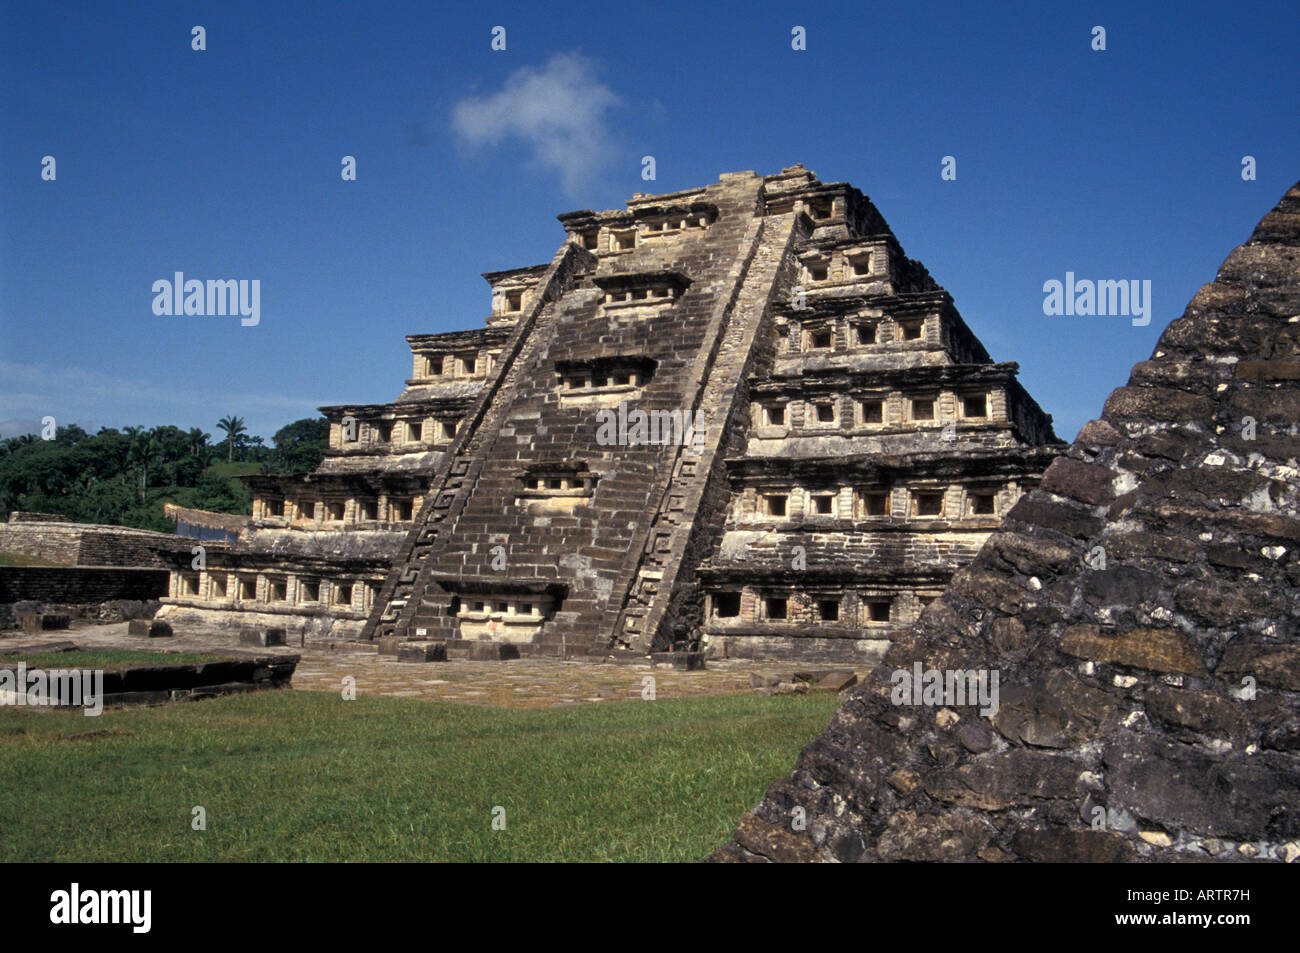 The Pyramid of the Niches at the Totonac ruins of El Tajin, Veracruz, Mexico Stock Photo